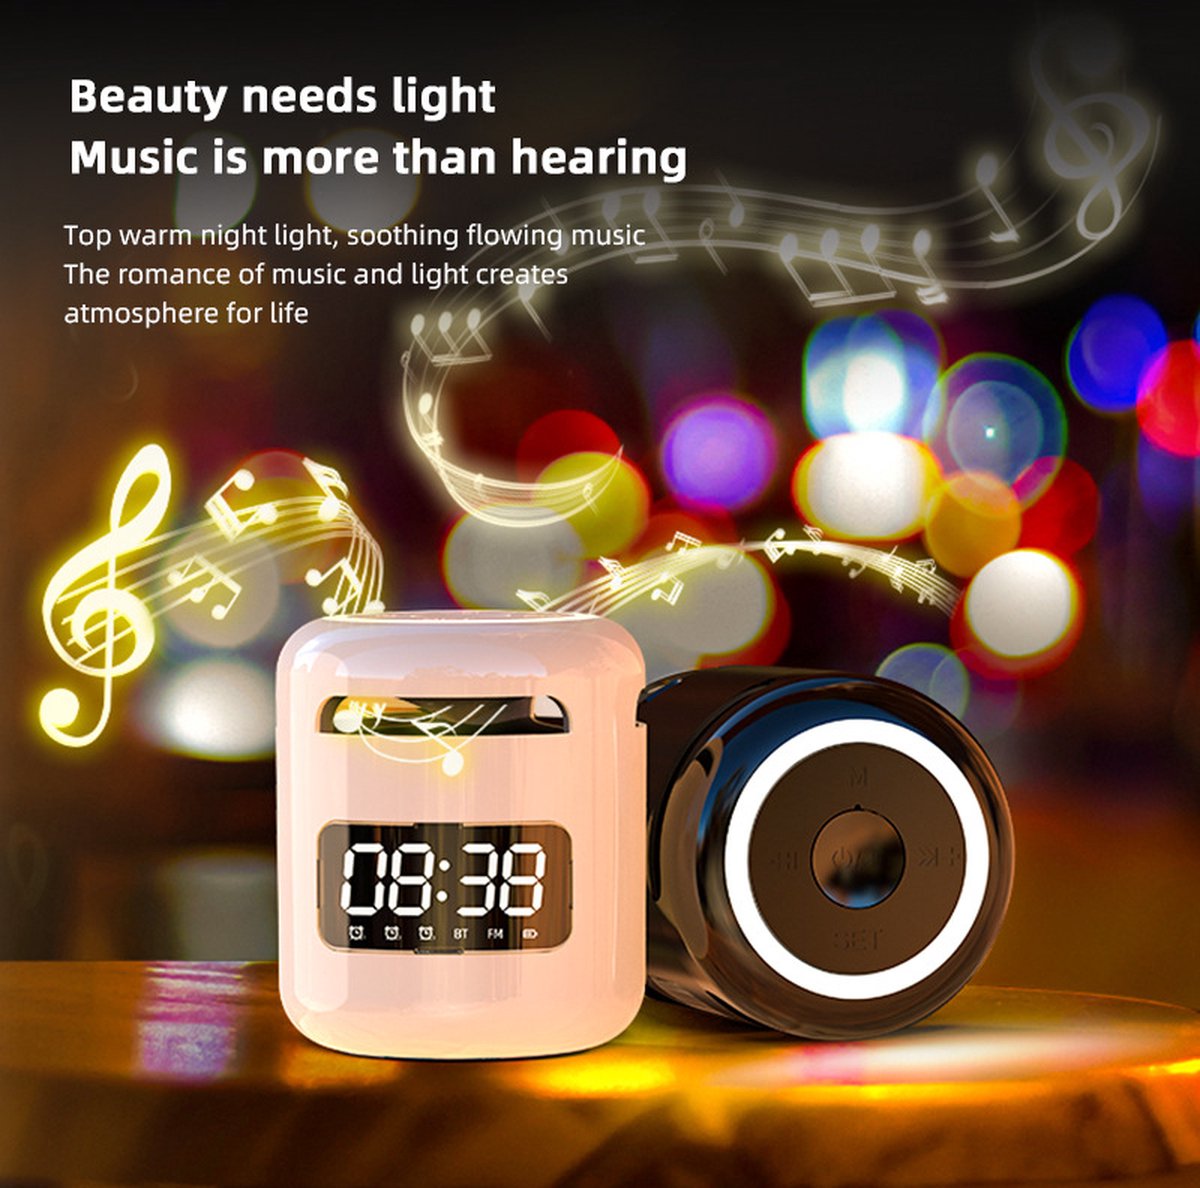 Pro-Care Draagbare Bluetooth 2.1 Stereo Alarm Klokradio Subwoofer Speaker 10W - LED Aflezen - FM Radio Functie - Micro USB aansluiting - AUX Aansluiting - TF card - Roze